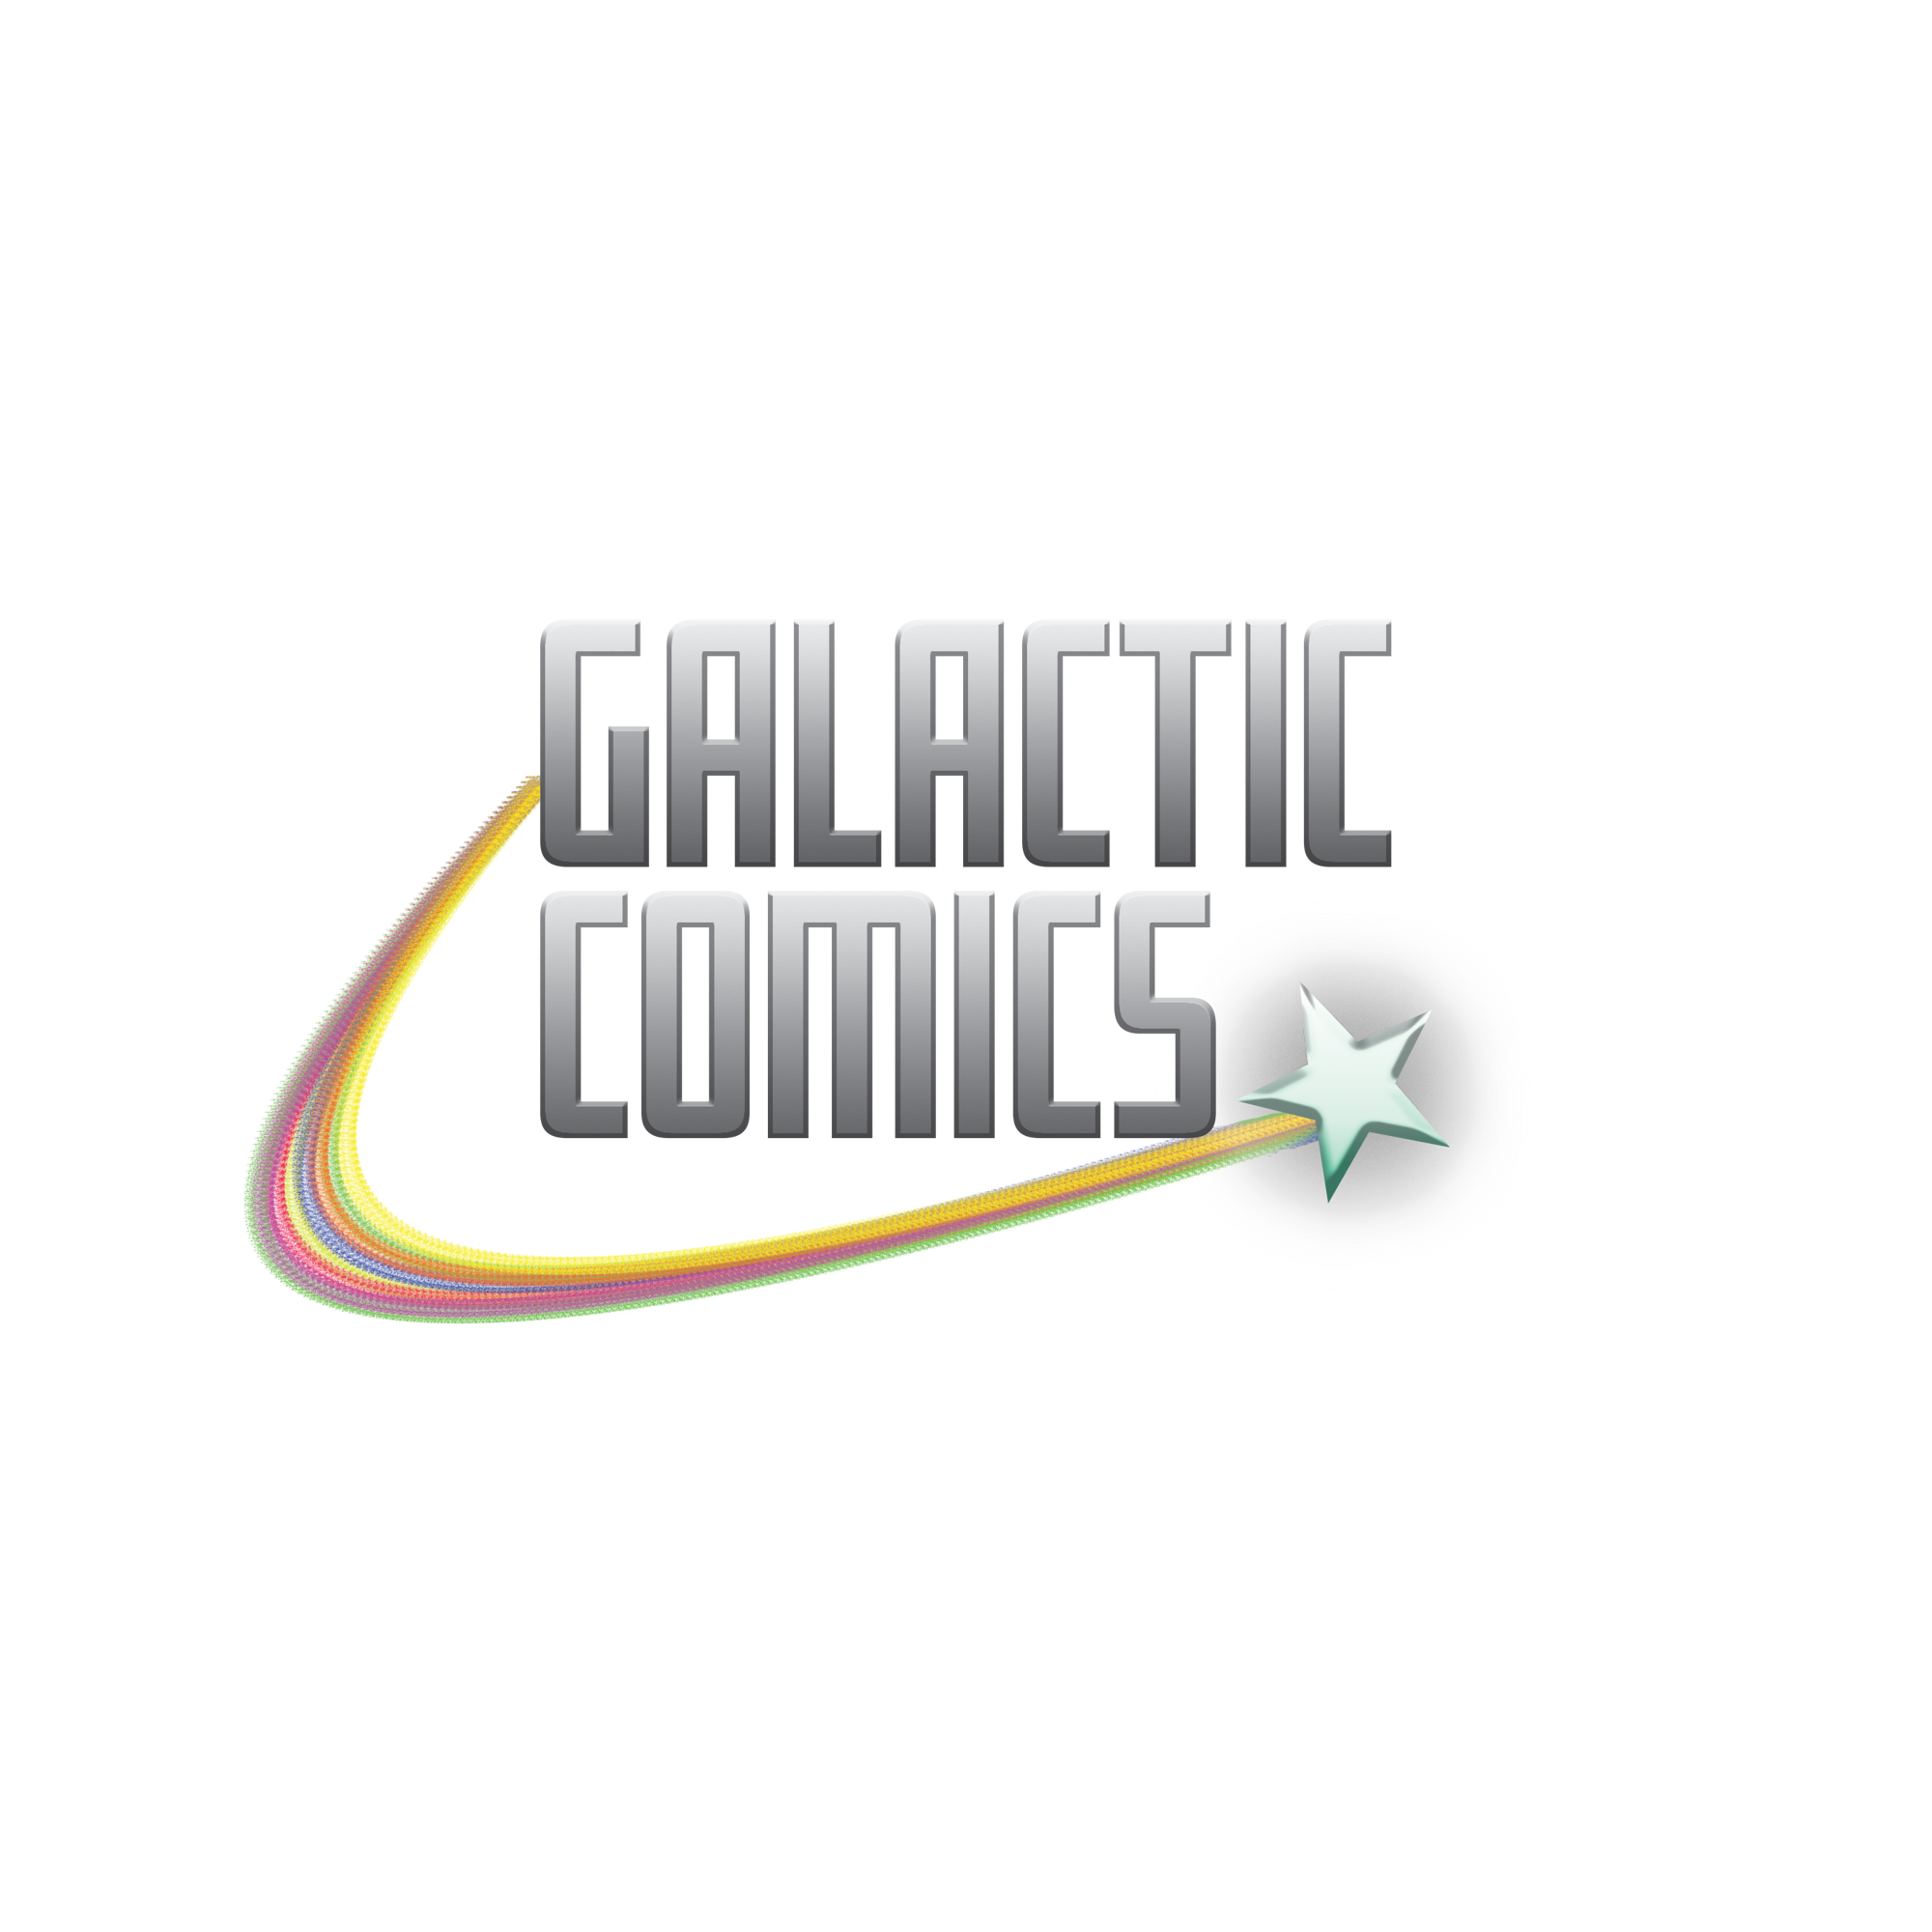 Galactic comics logo